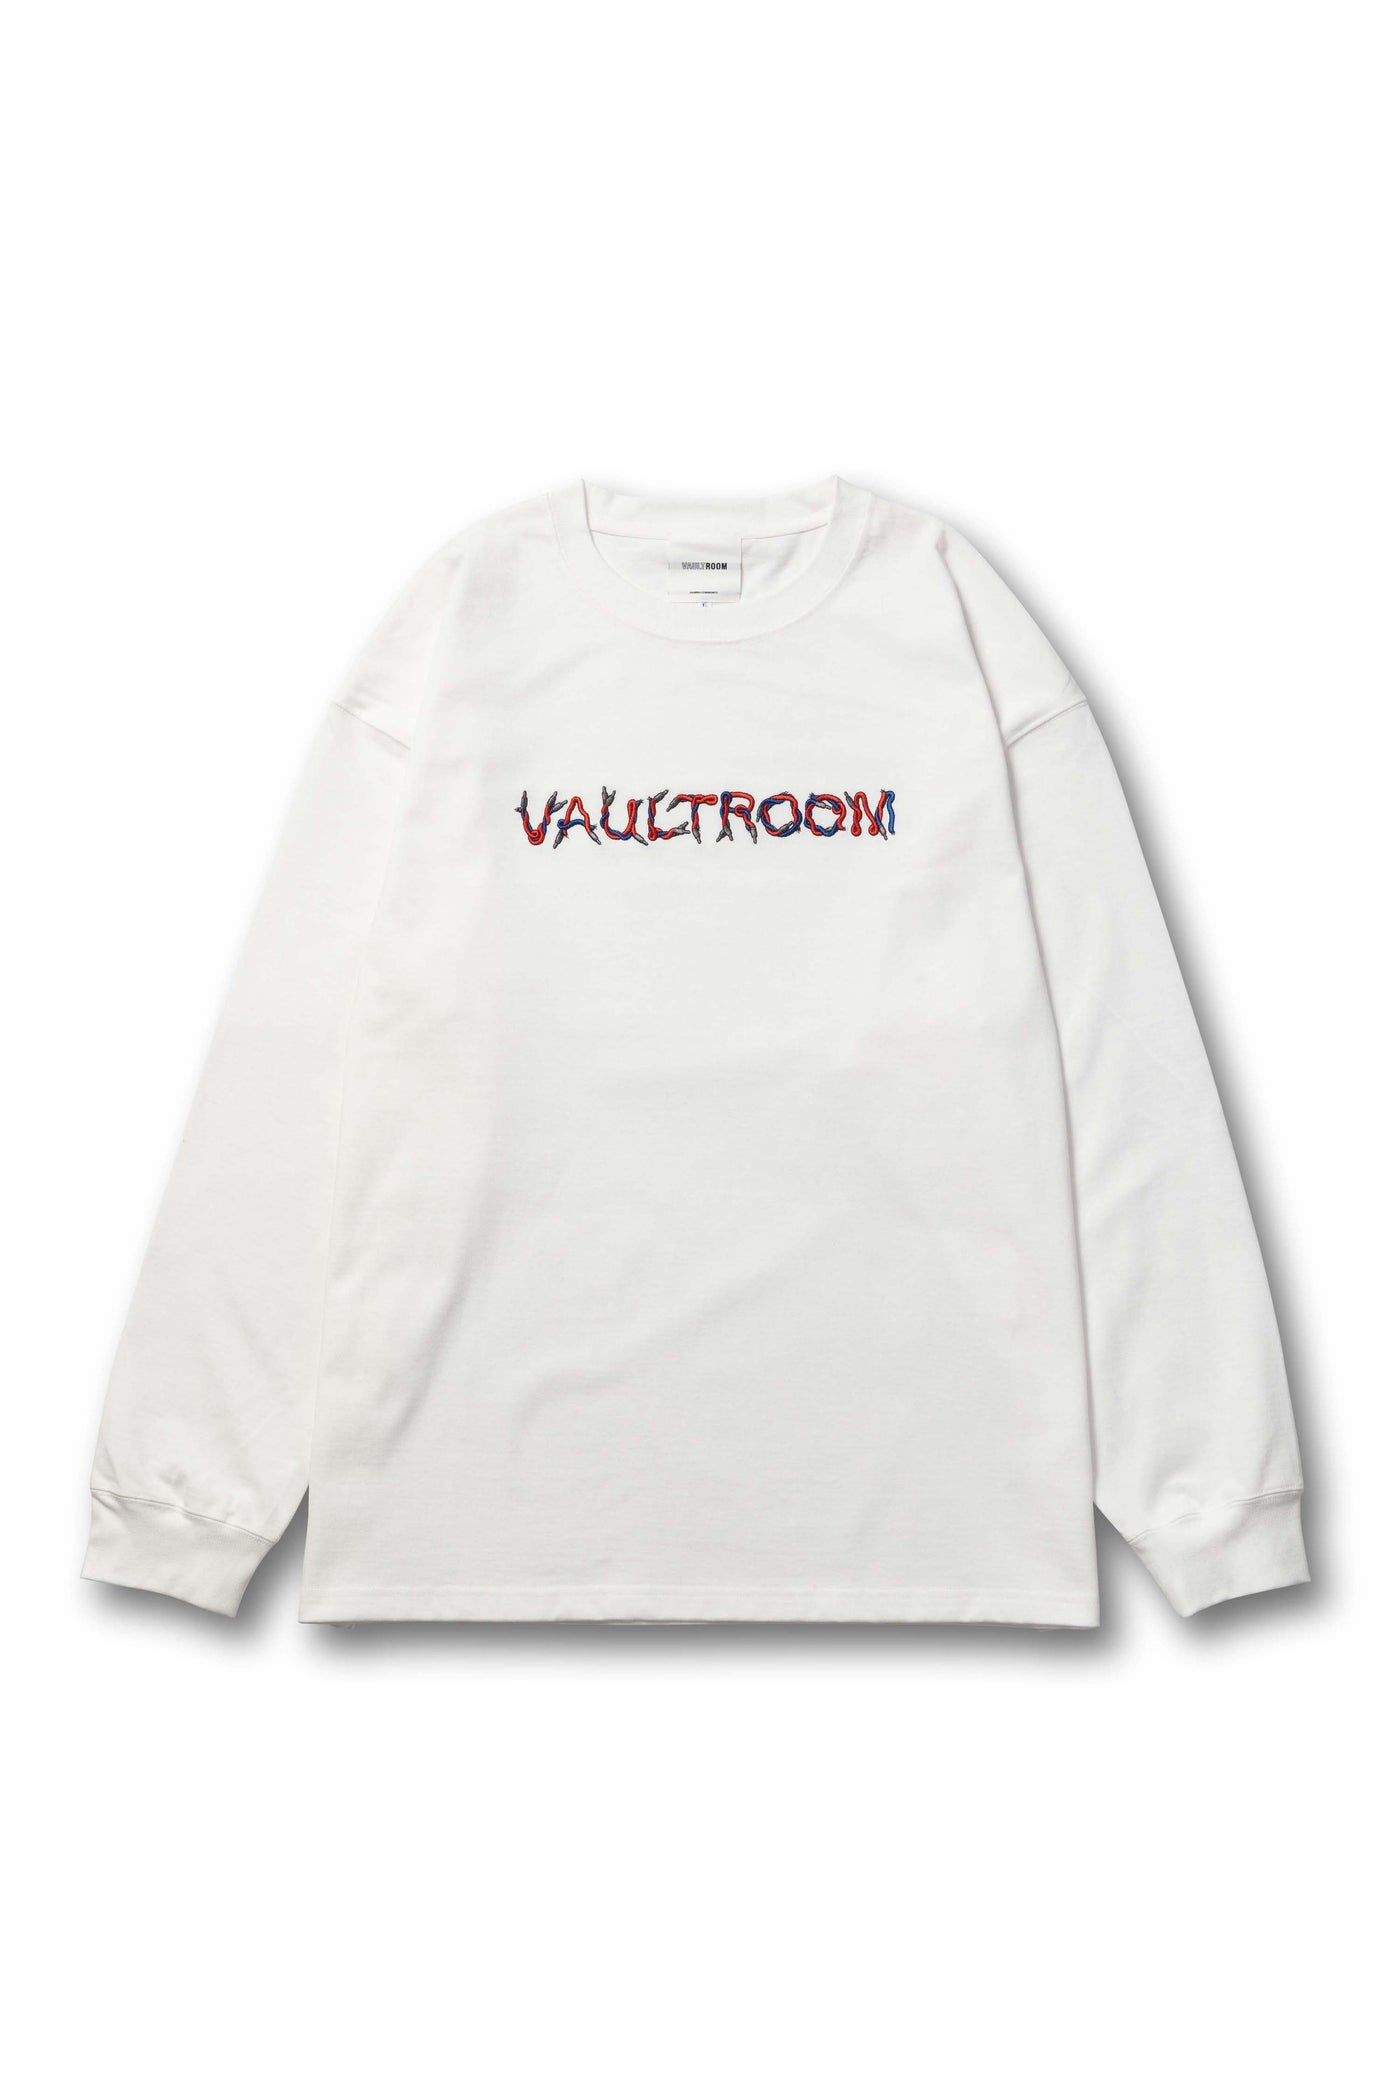 vaultroom VR × AKARIN BIG L/S TEE /WHT L - Tシャツ/カットソー(七分